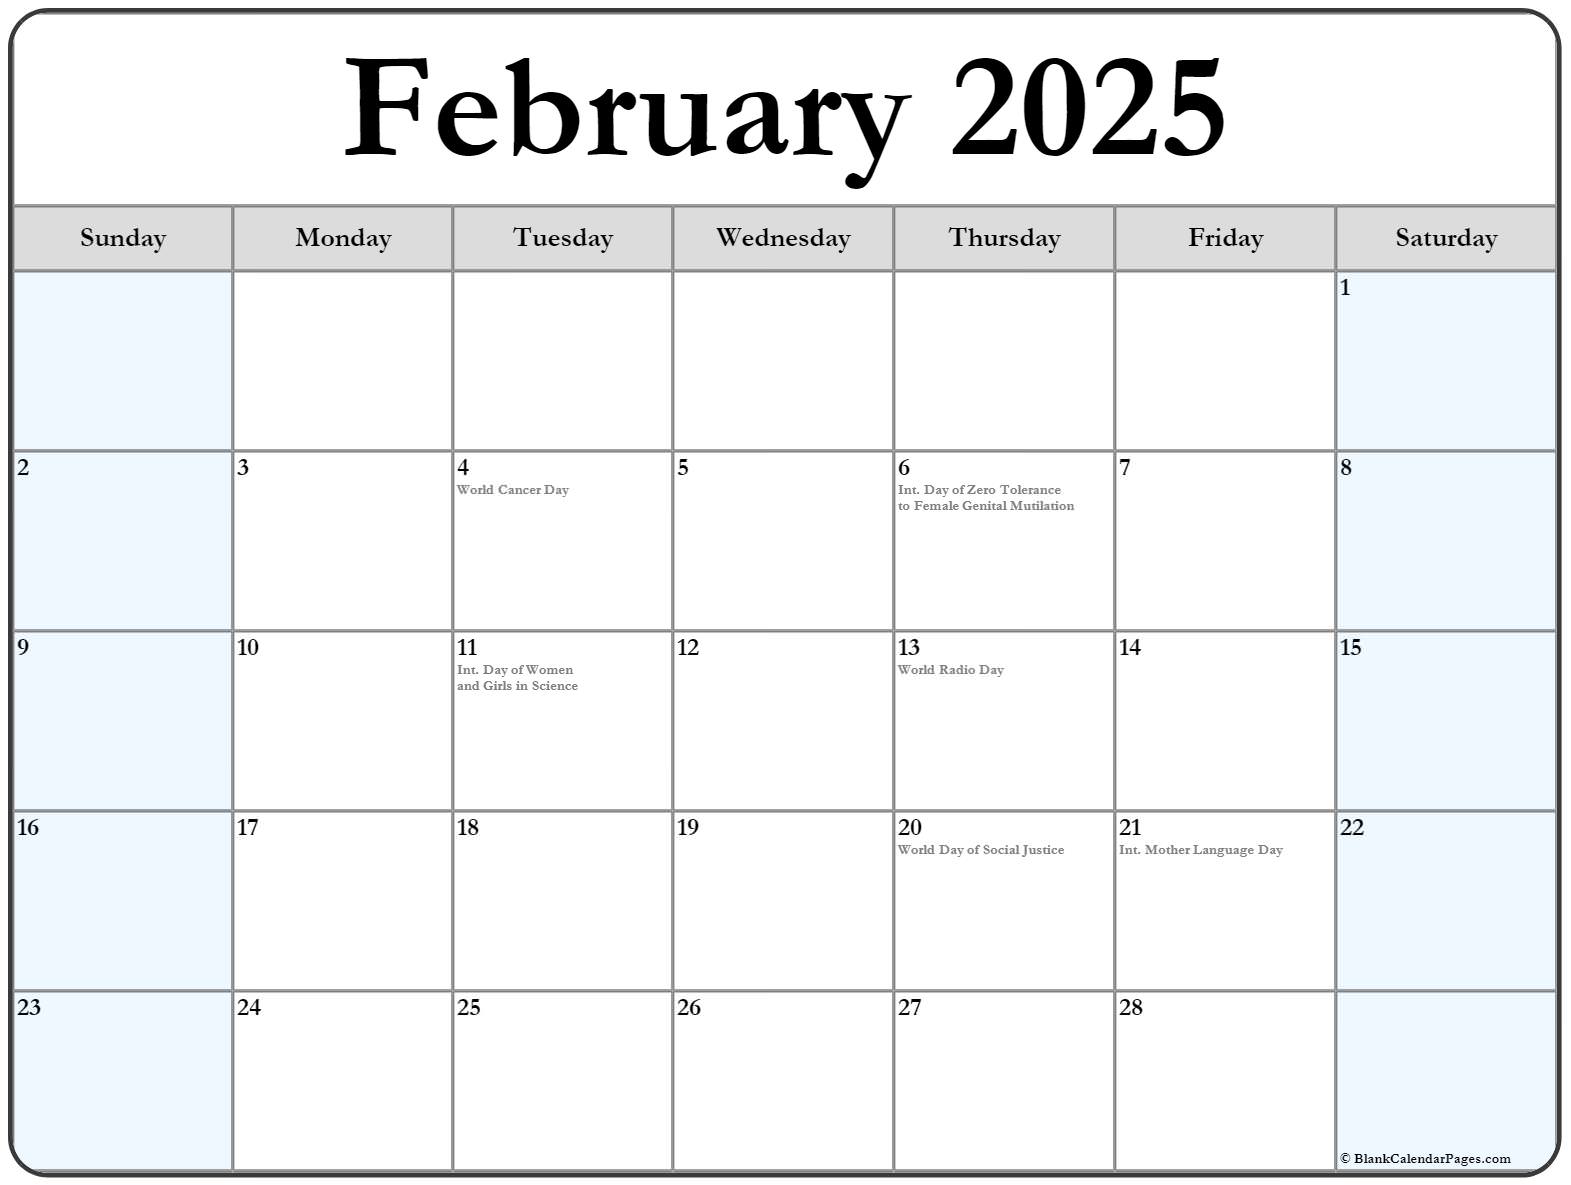 February 2025 Calendar Page 